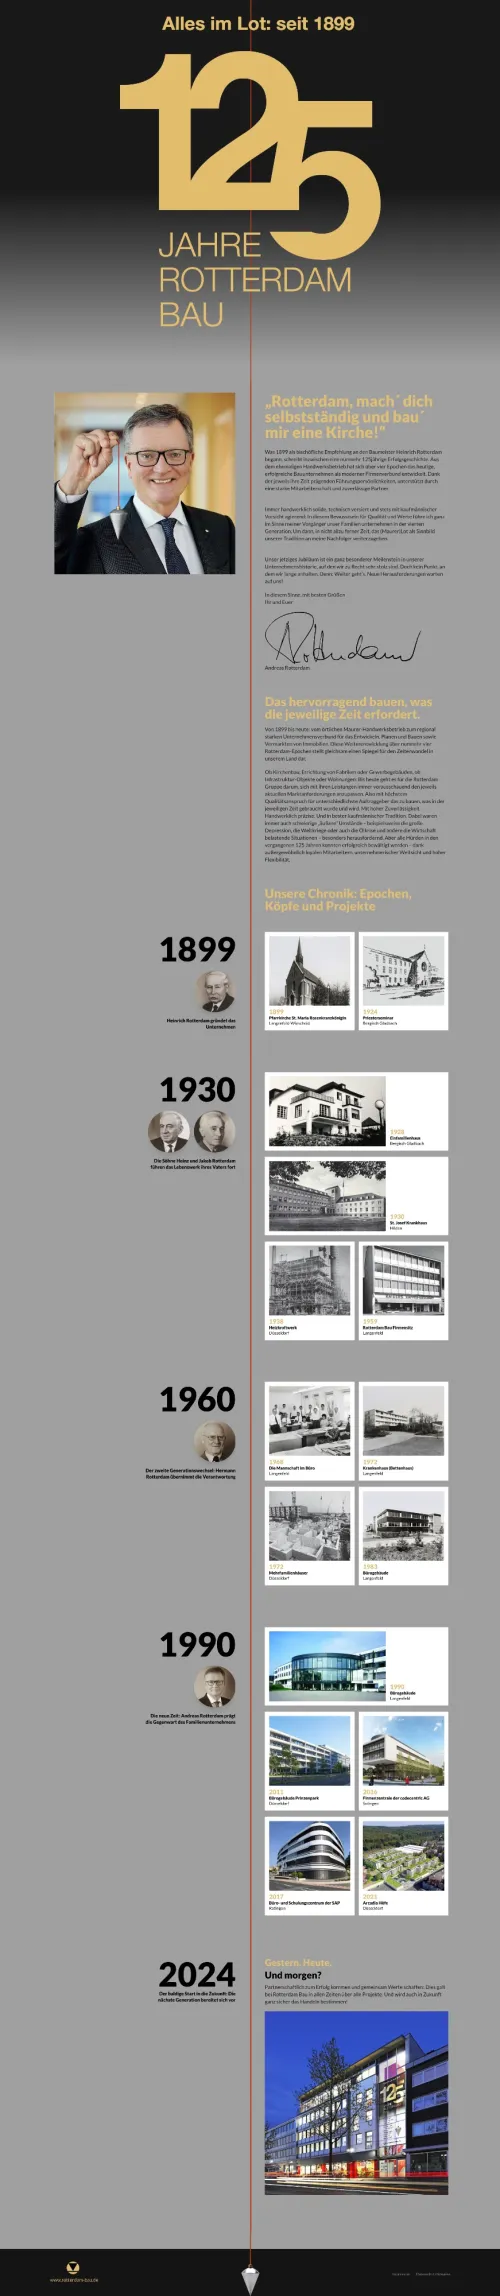 125 Jahre Rotterdam Bau